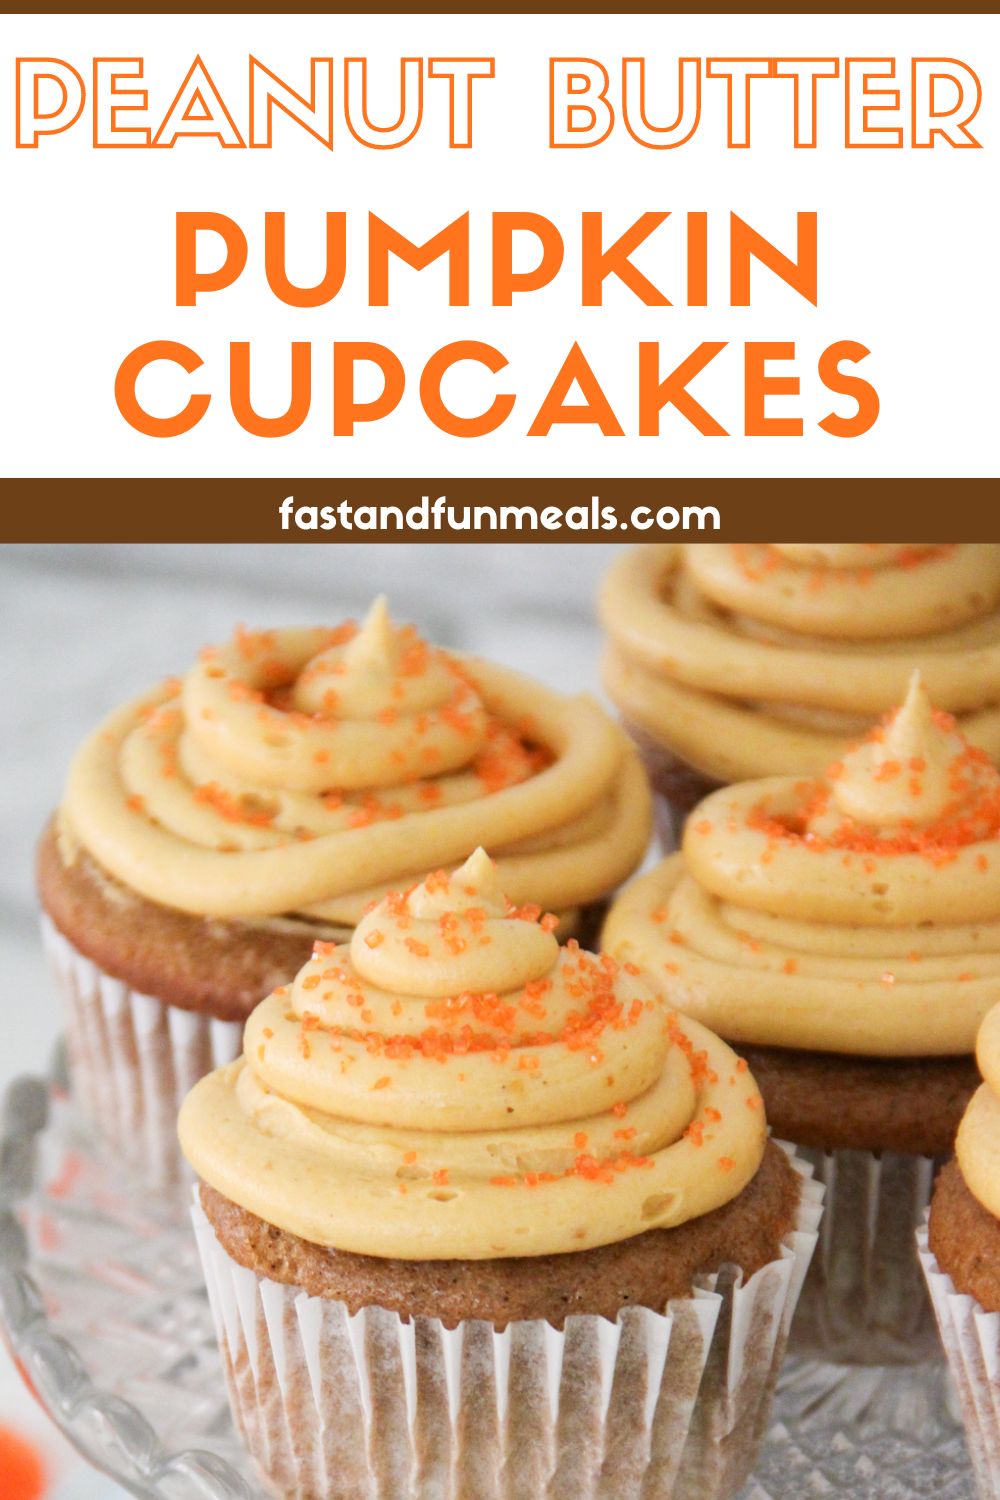 Pinterest image for peanut butter pumpkin cupcakes